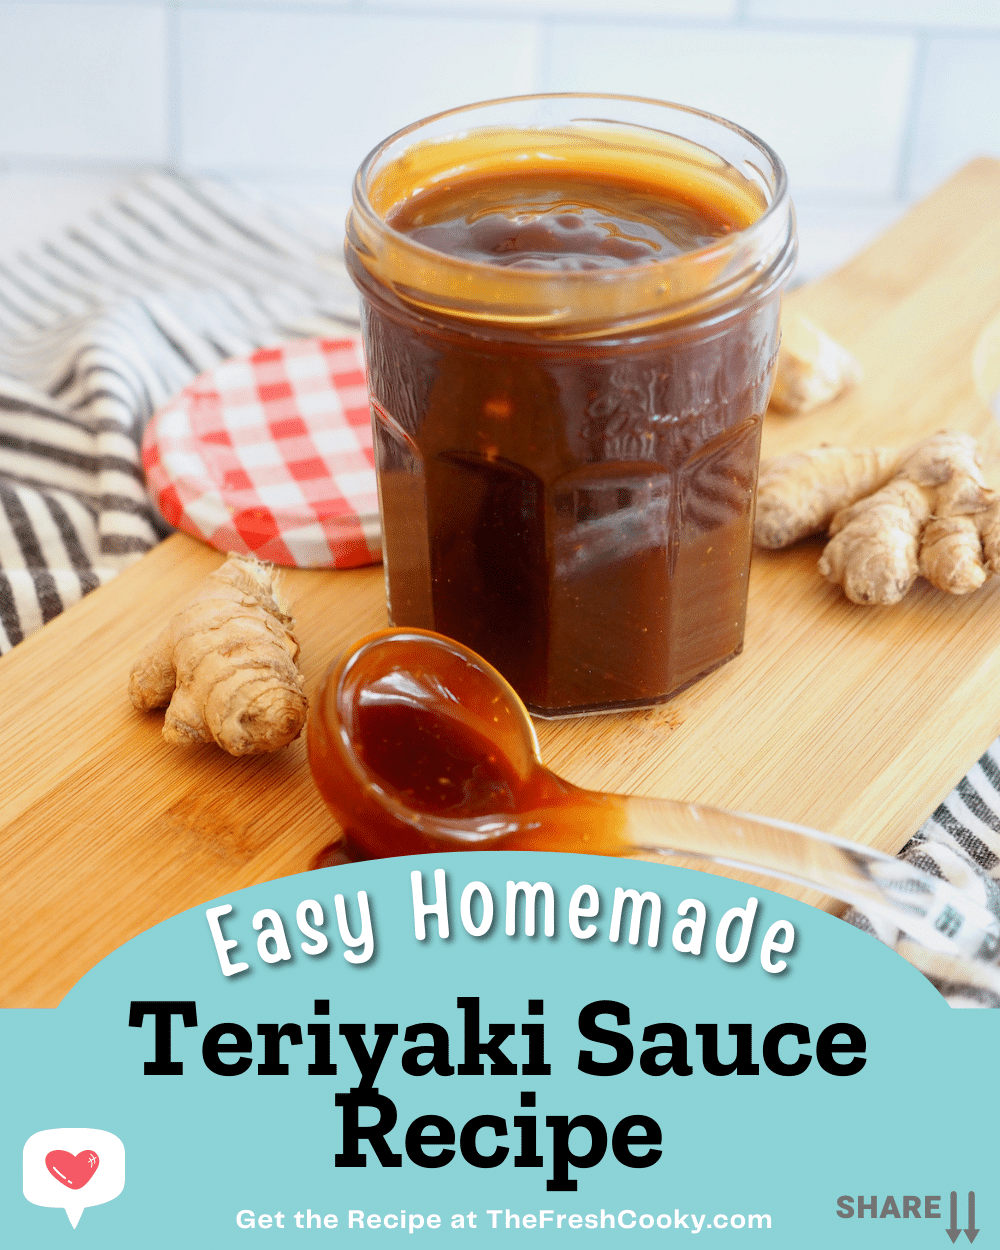 Easy Homemade Teriyaki Sauce Recipe